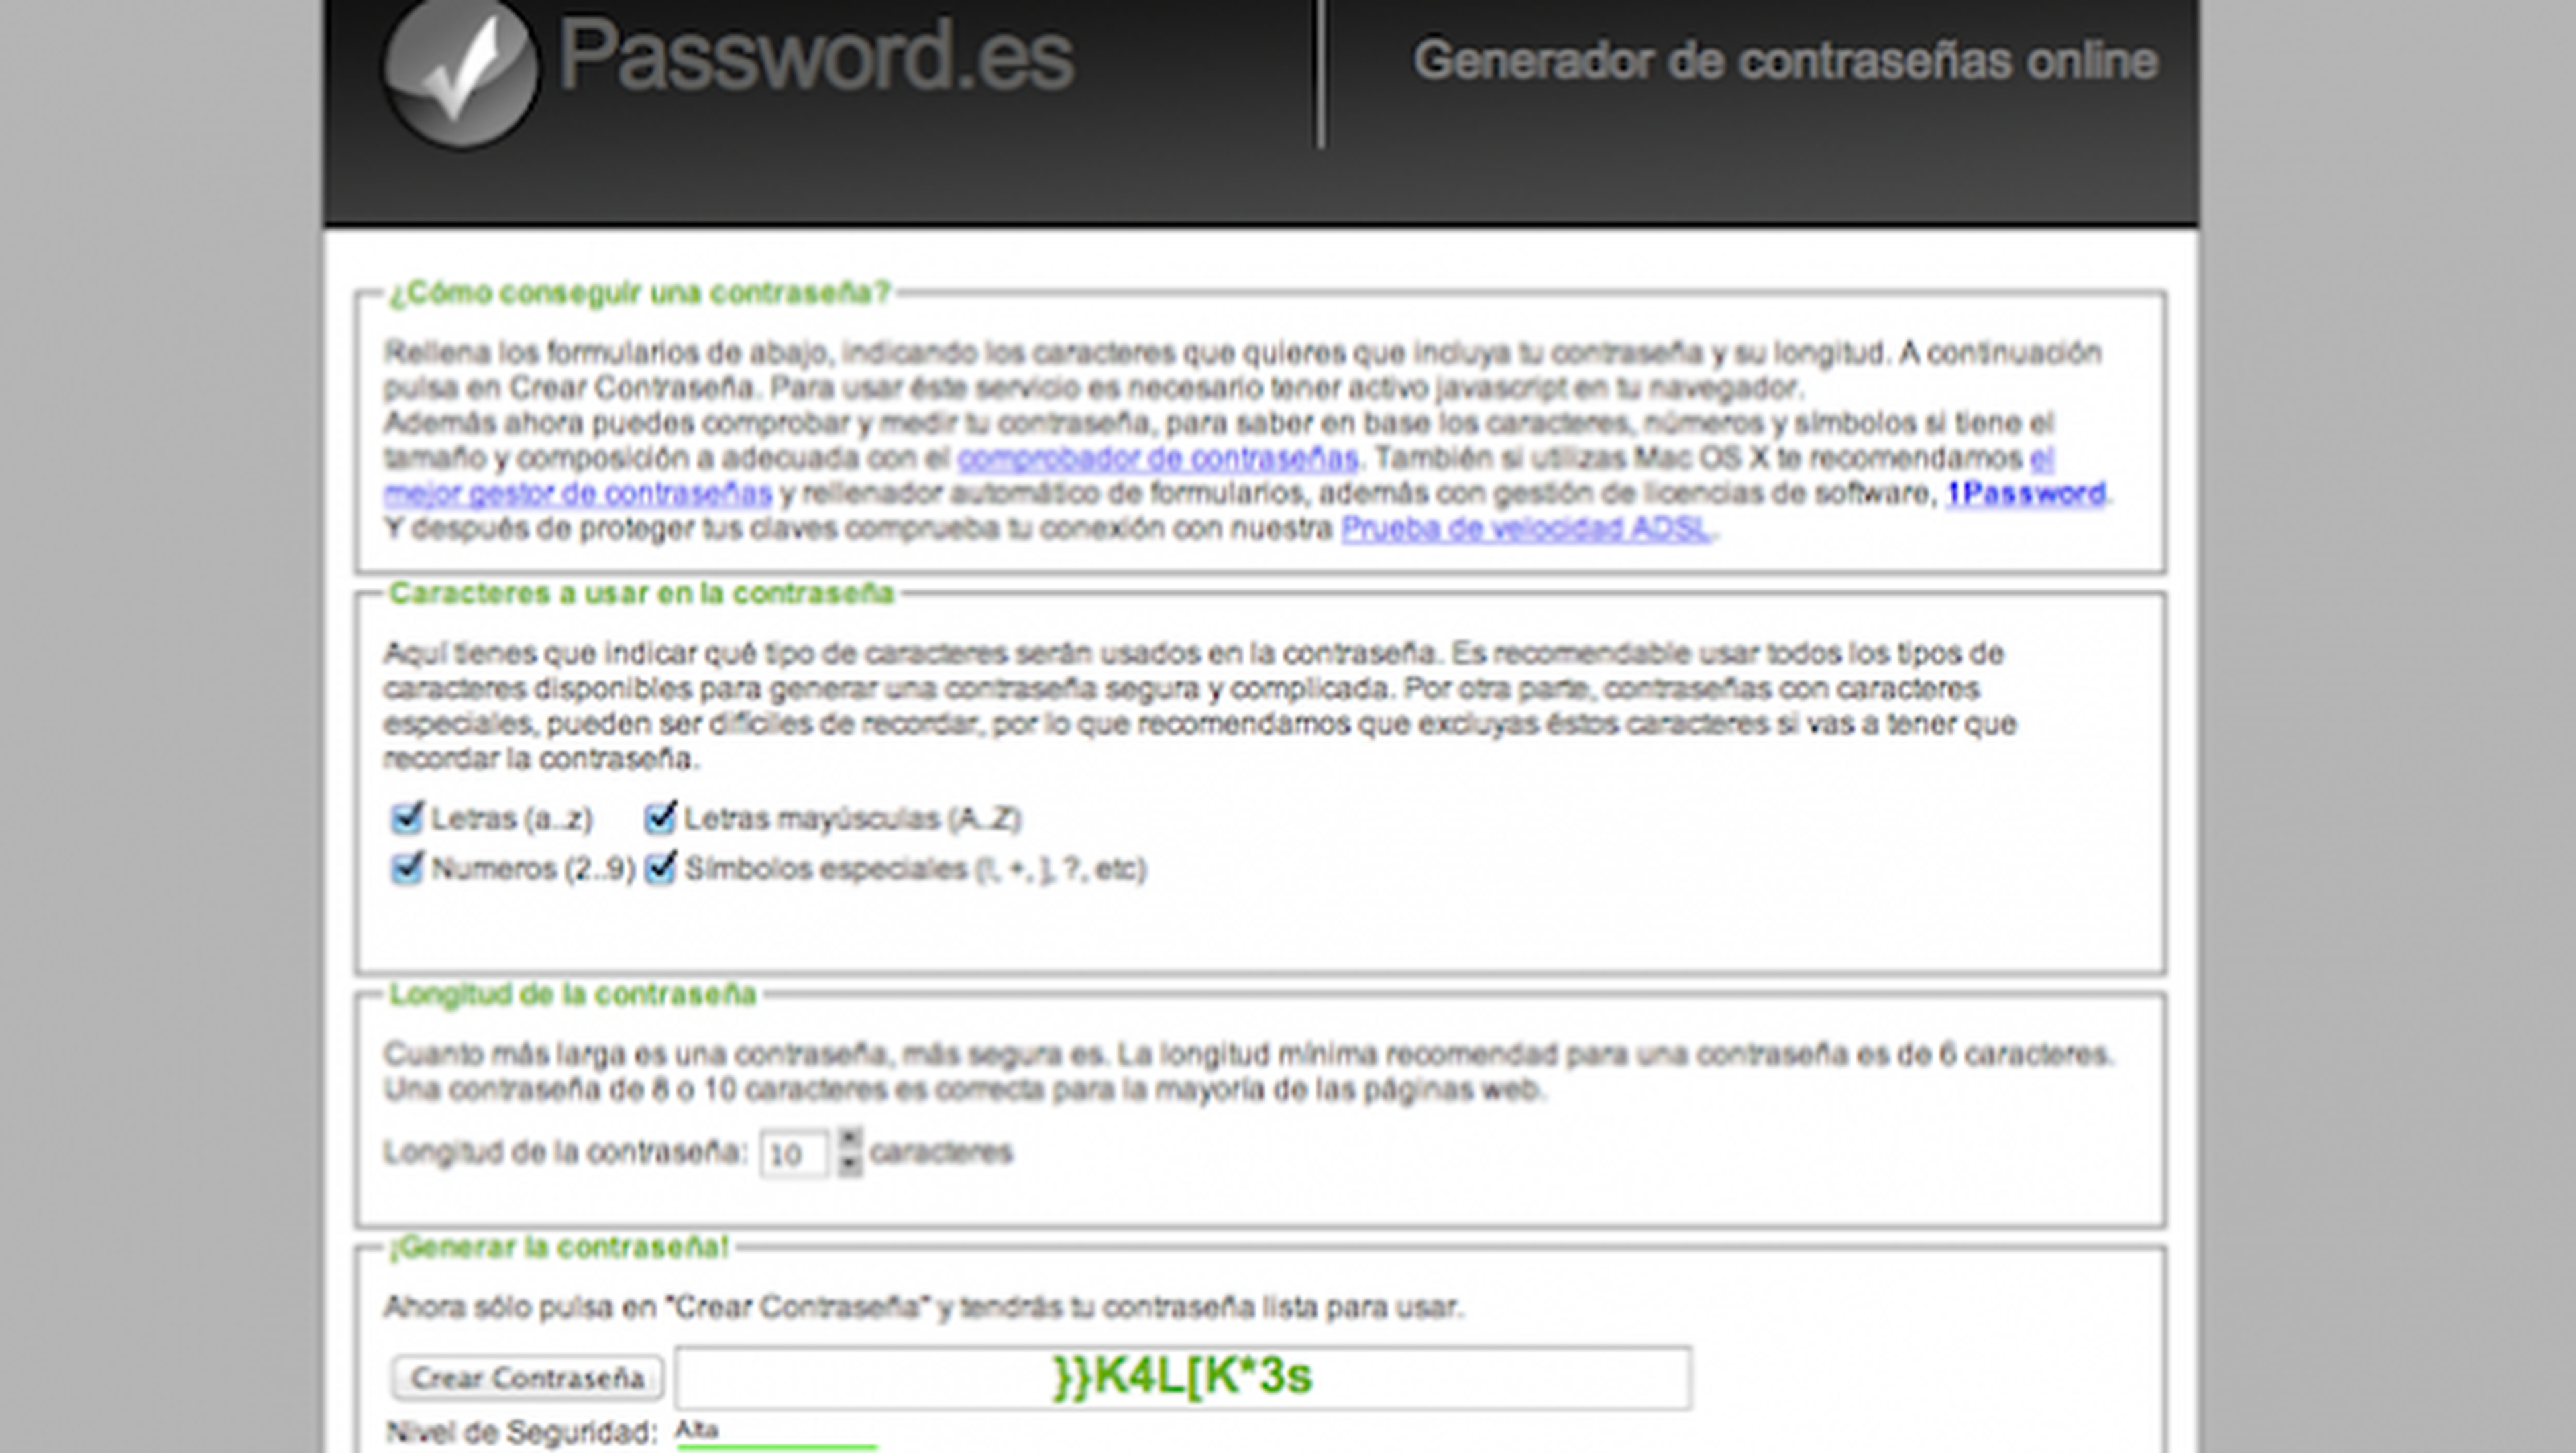 Password.es